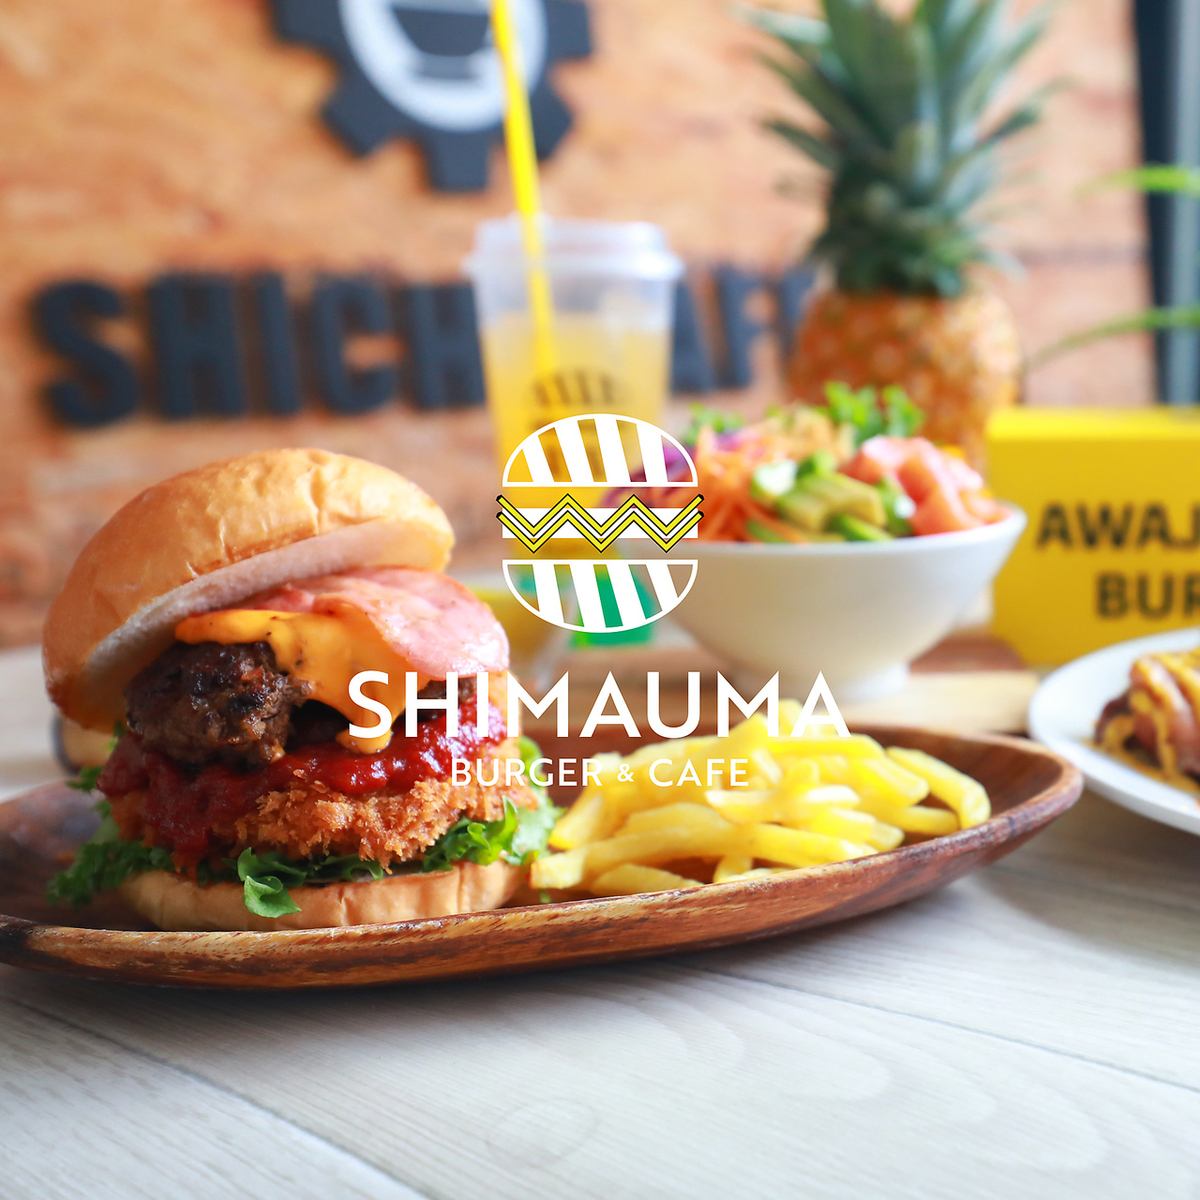 ≪Volume x Taste≫ Enjoy the best burger served with exquisite Awaji beef!